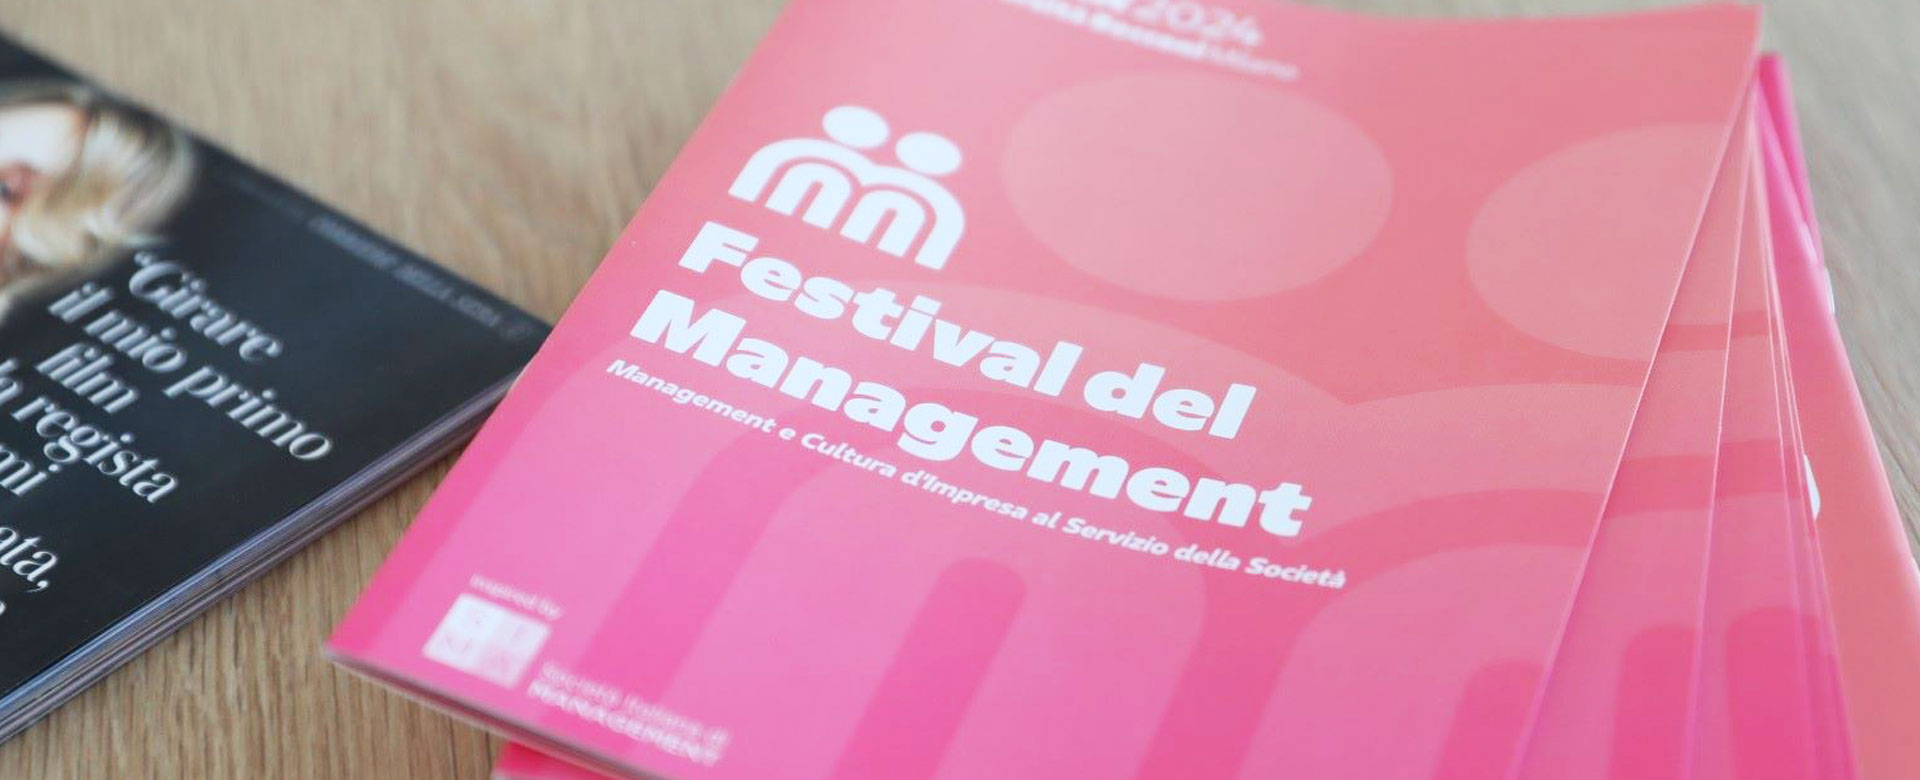 Brochure Festival del management